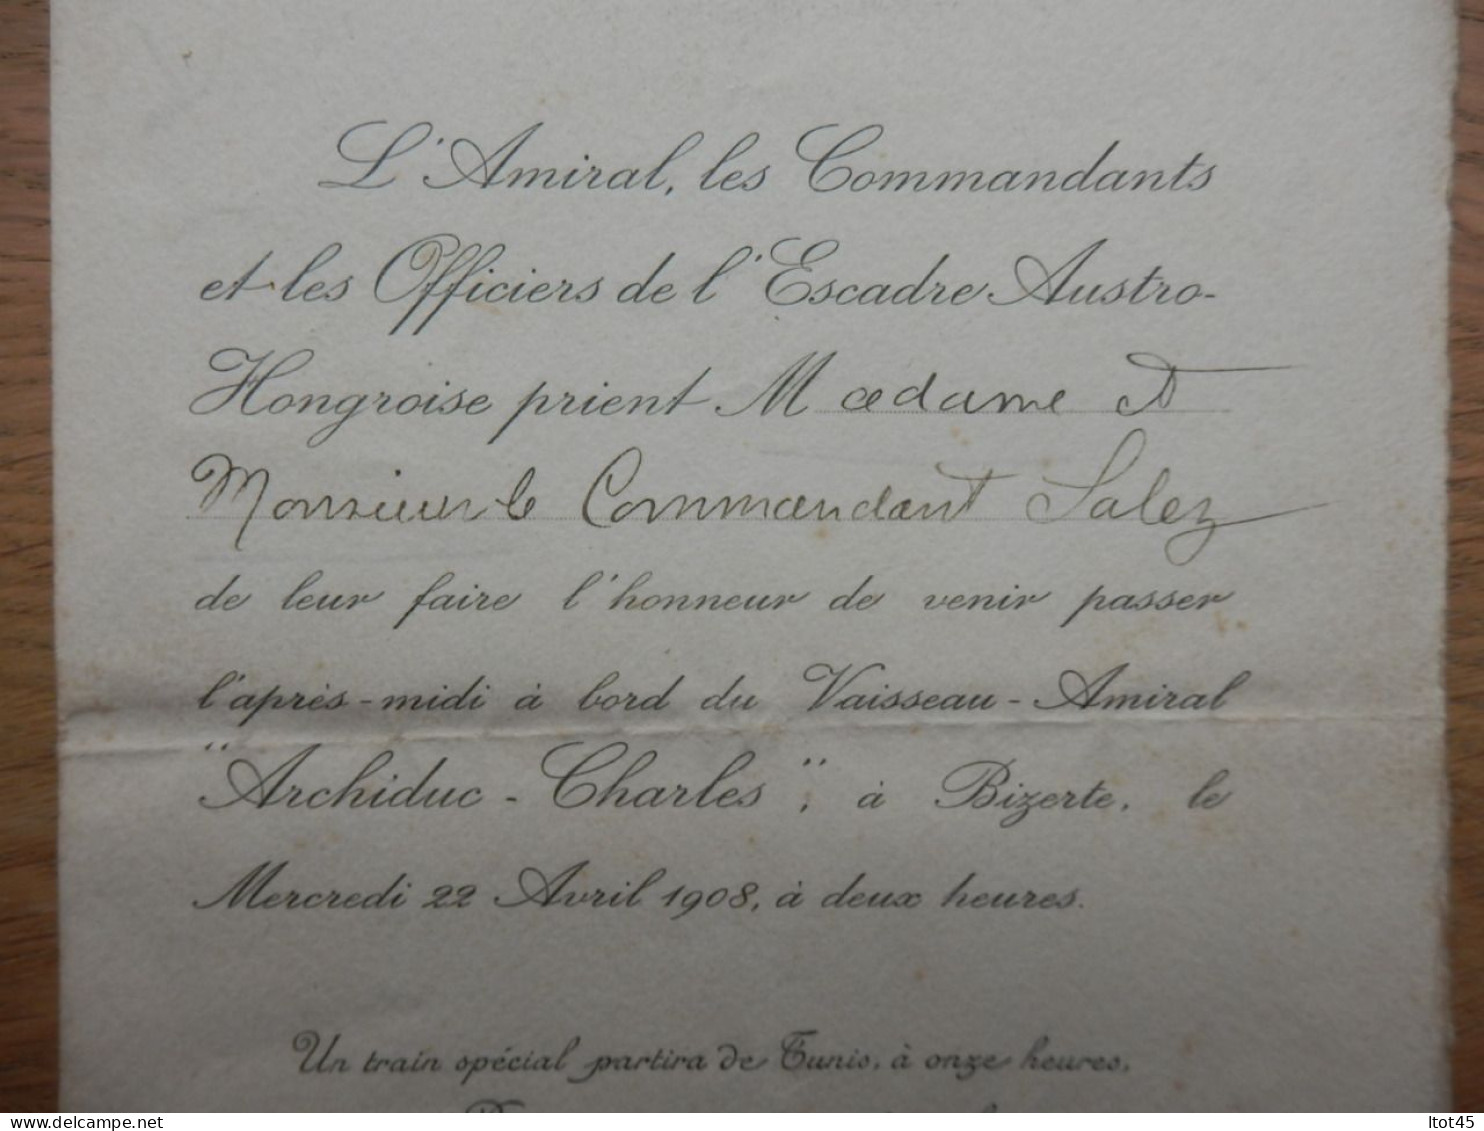 INVITATION A BORD DU VAISSEAU-AMIRAL ARCHIDUC-CHARLES BIZERTE 1908 - Bateaux